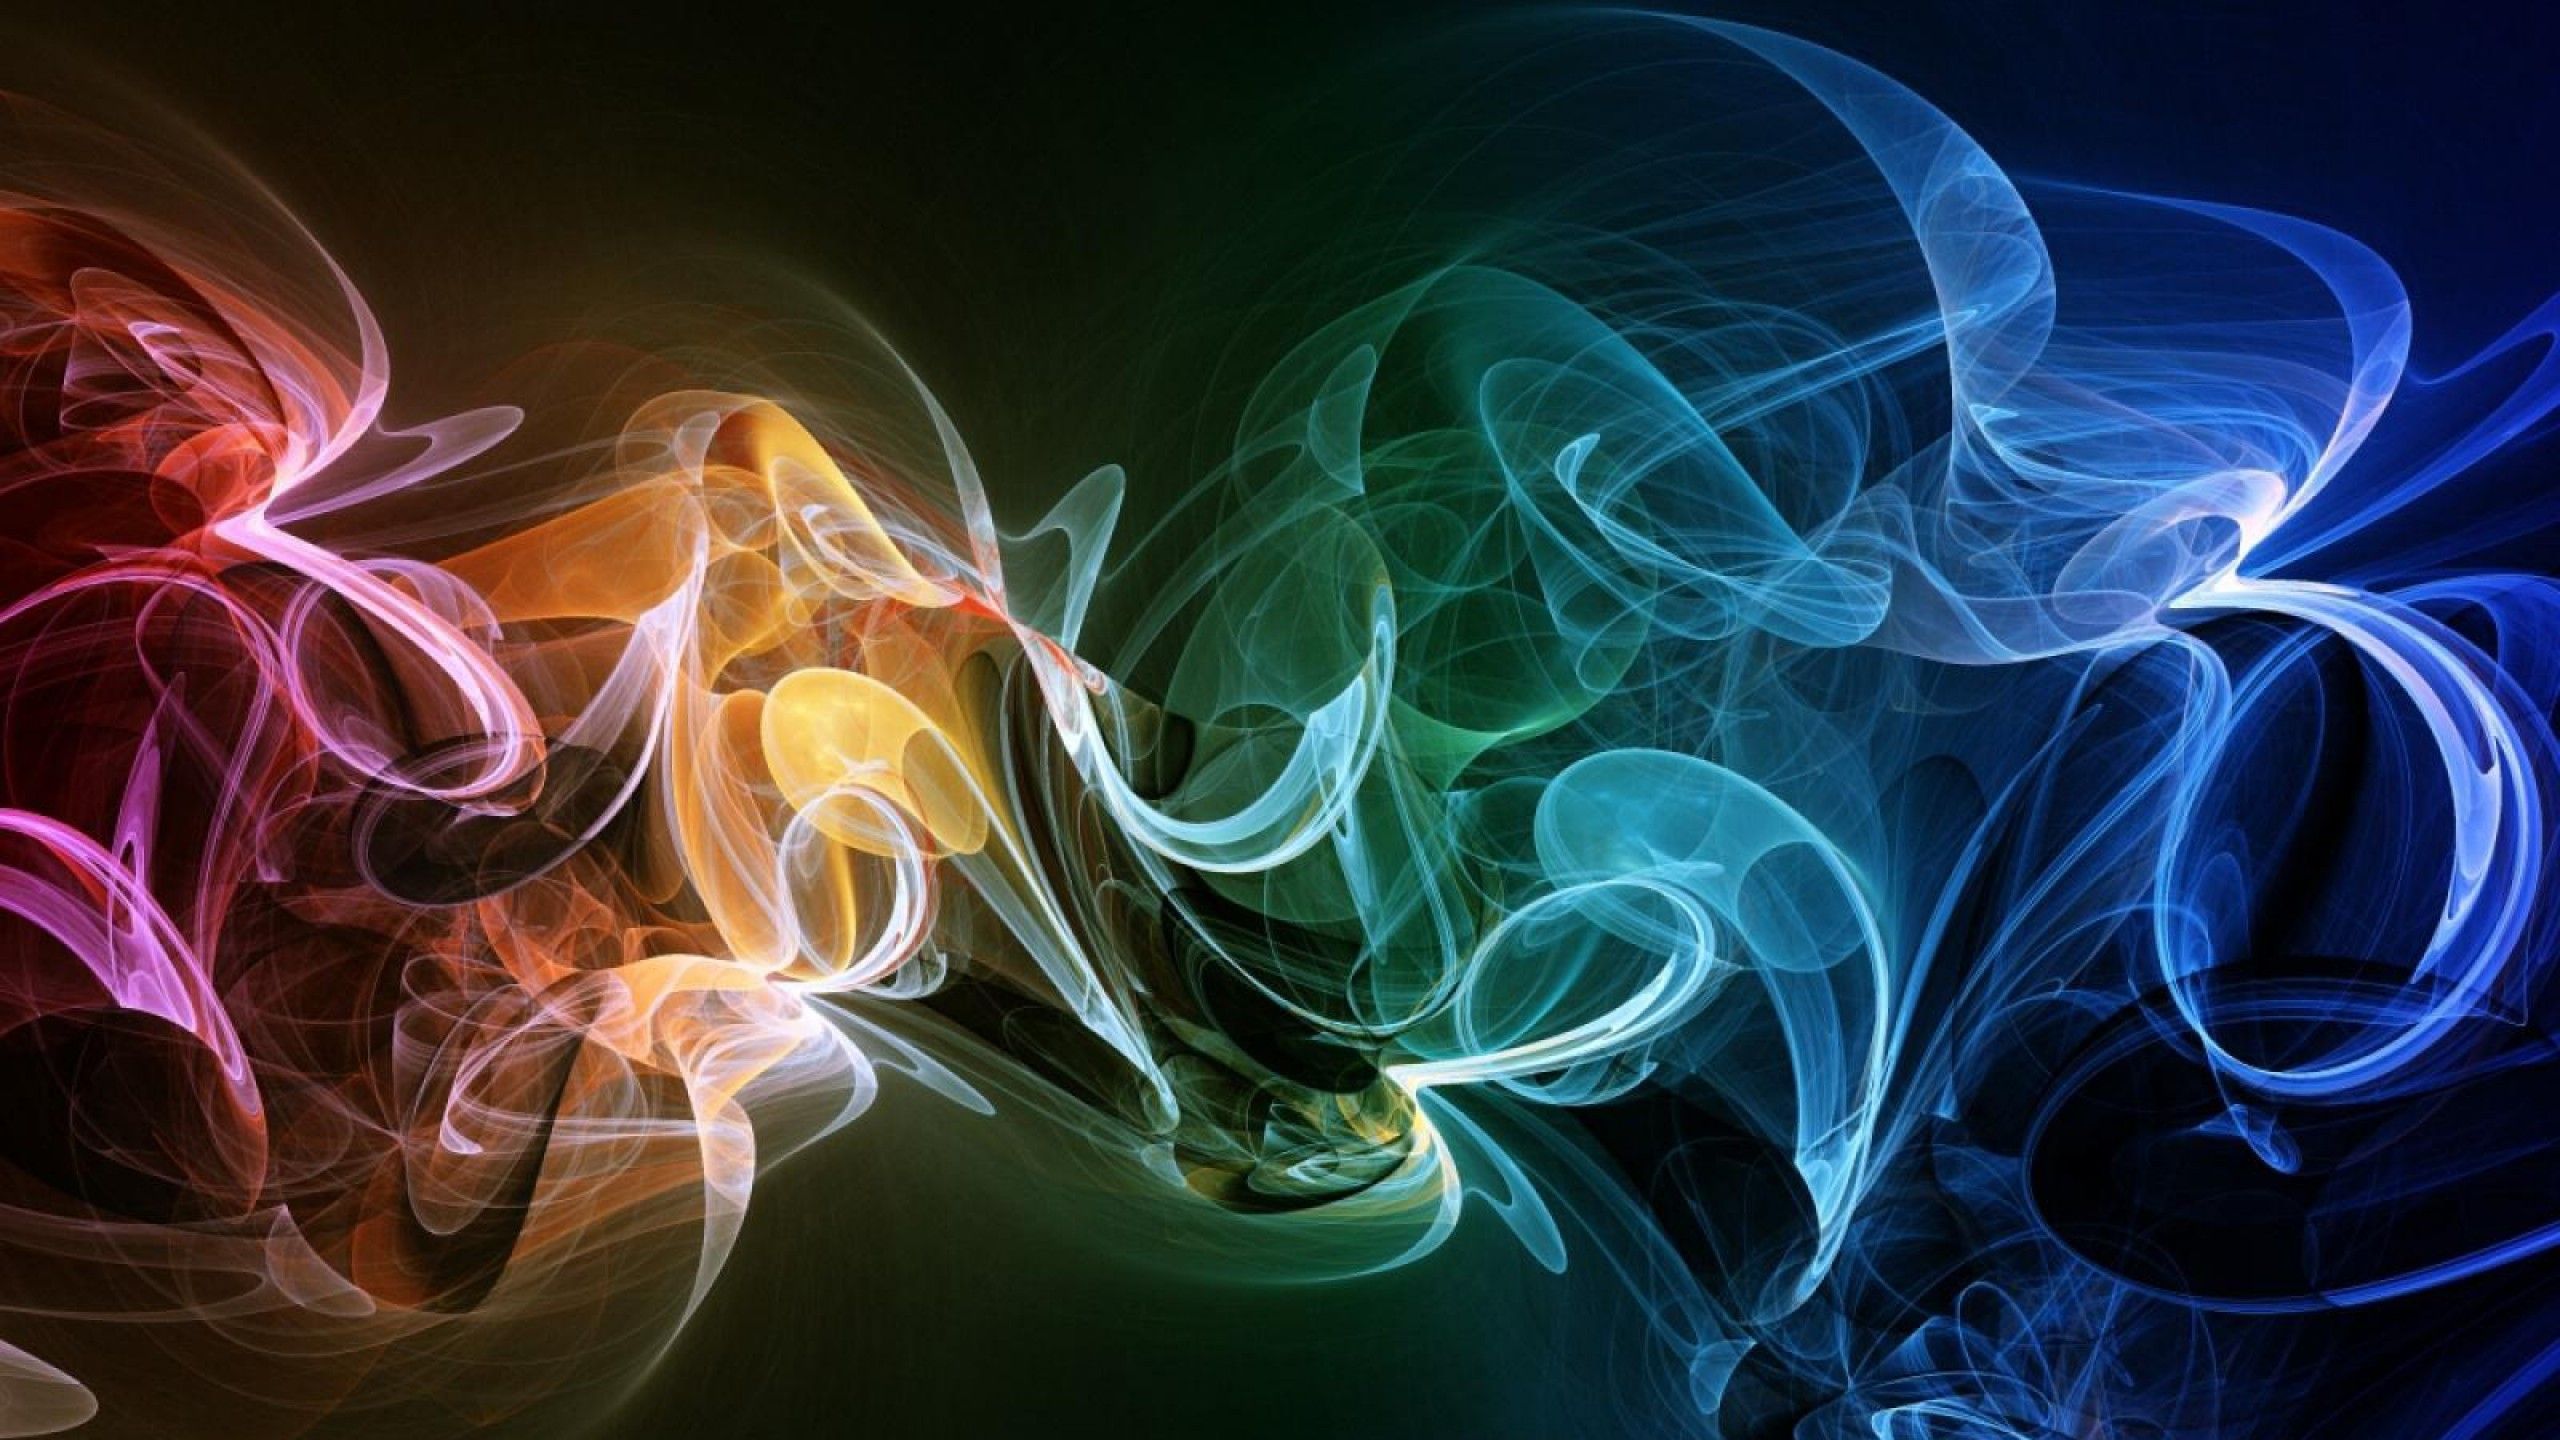 Colored Smoke 640 x 960 iPhone 4 Wallpaper